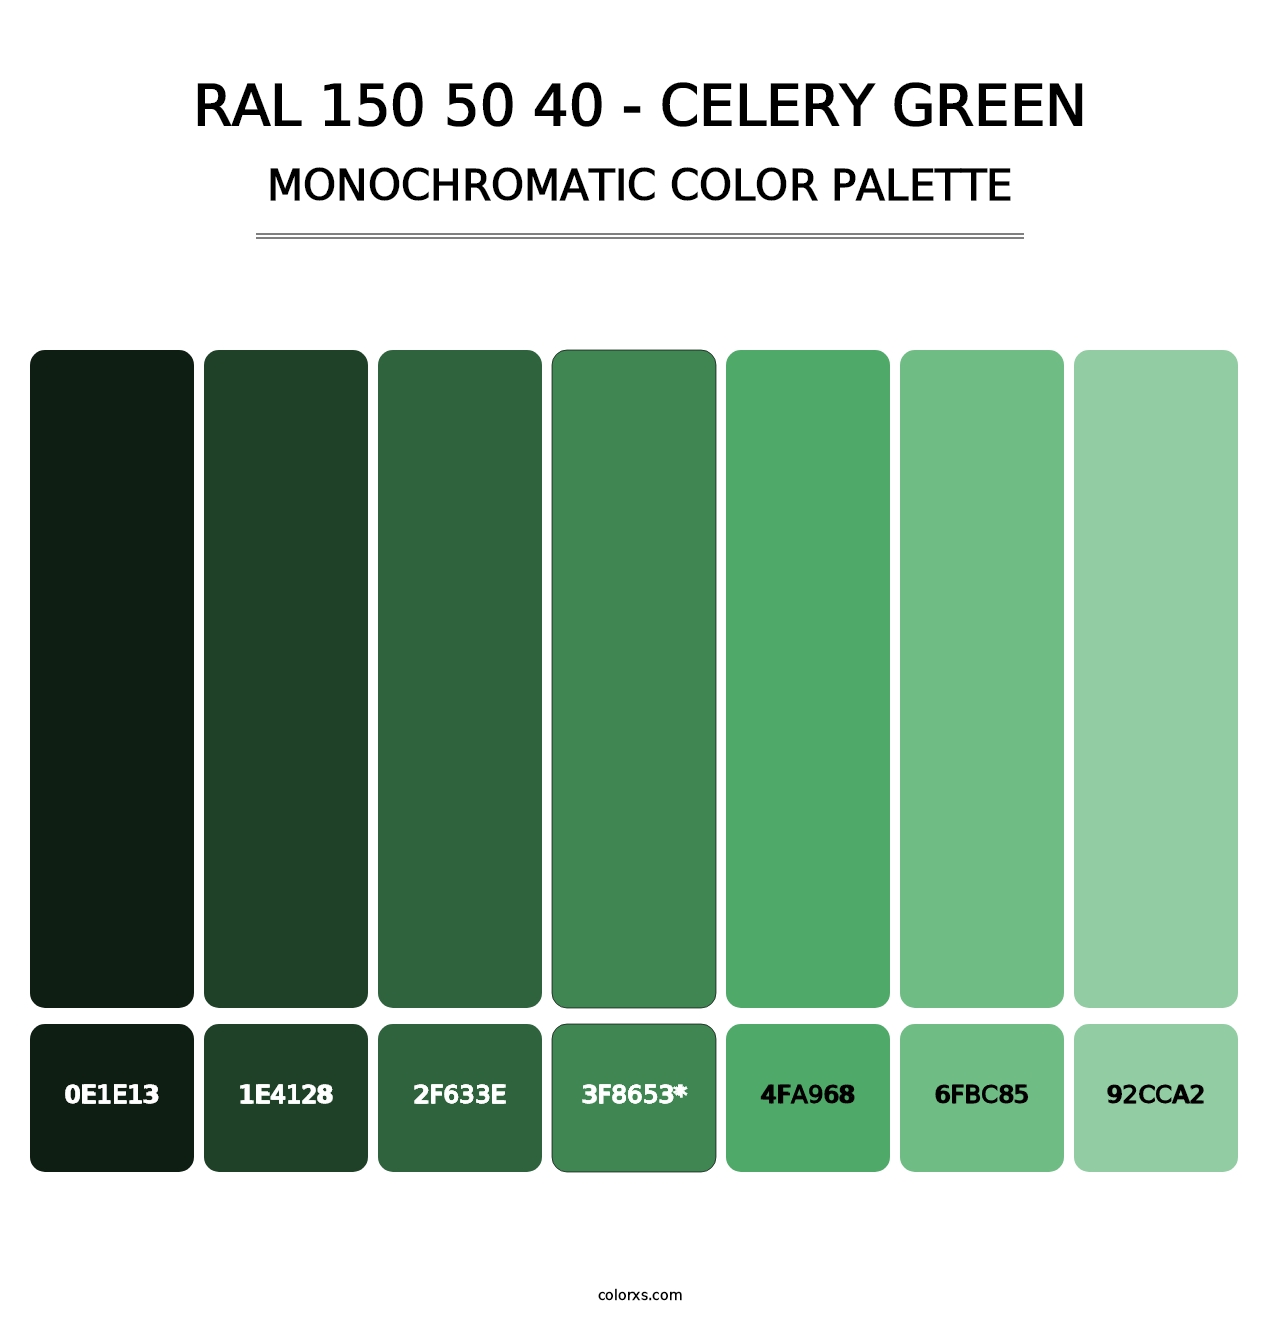 RAL 150 50 40 - Celery Green - Monochromatic Color Palette